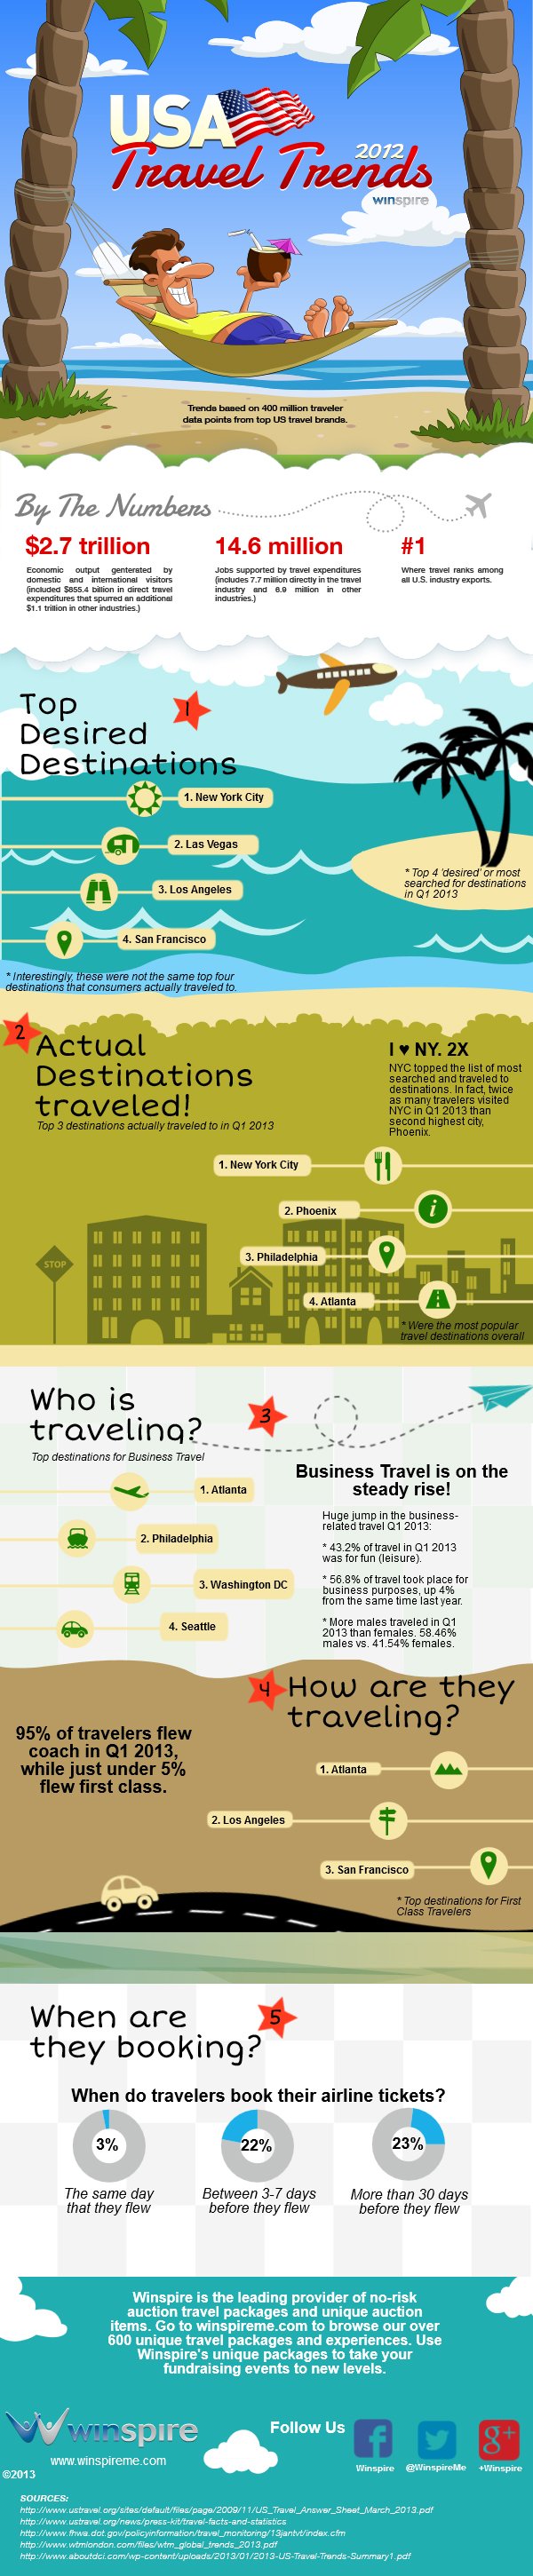 Winspire Travel Trends Infographic